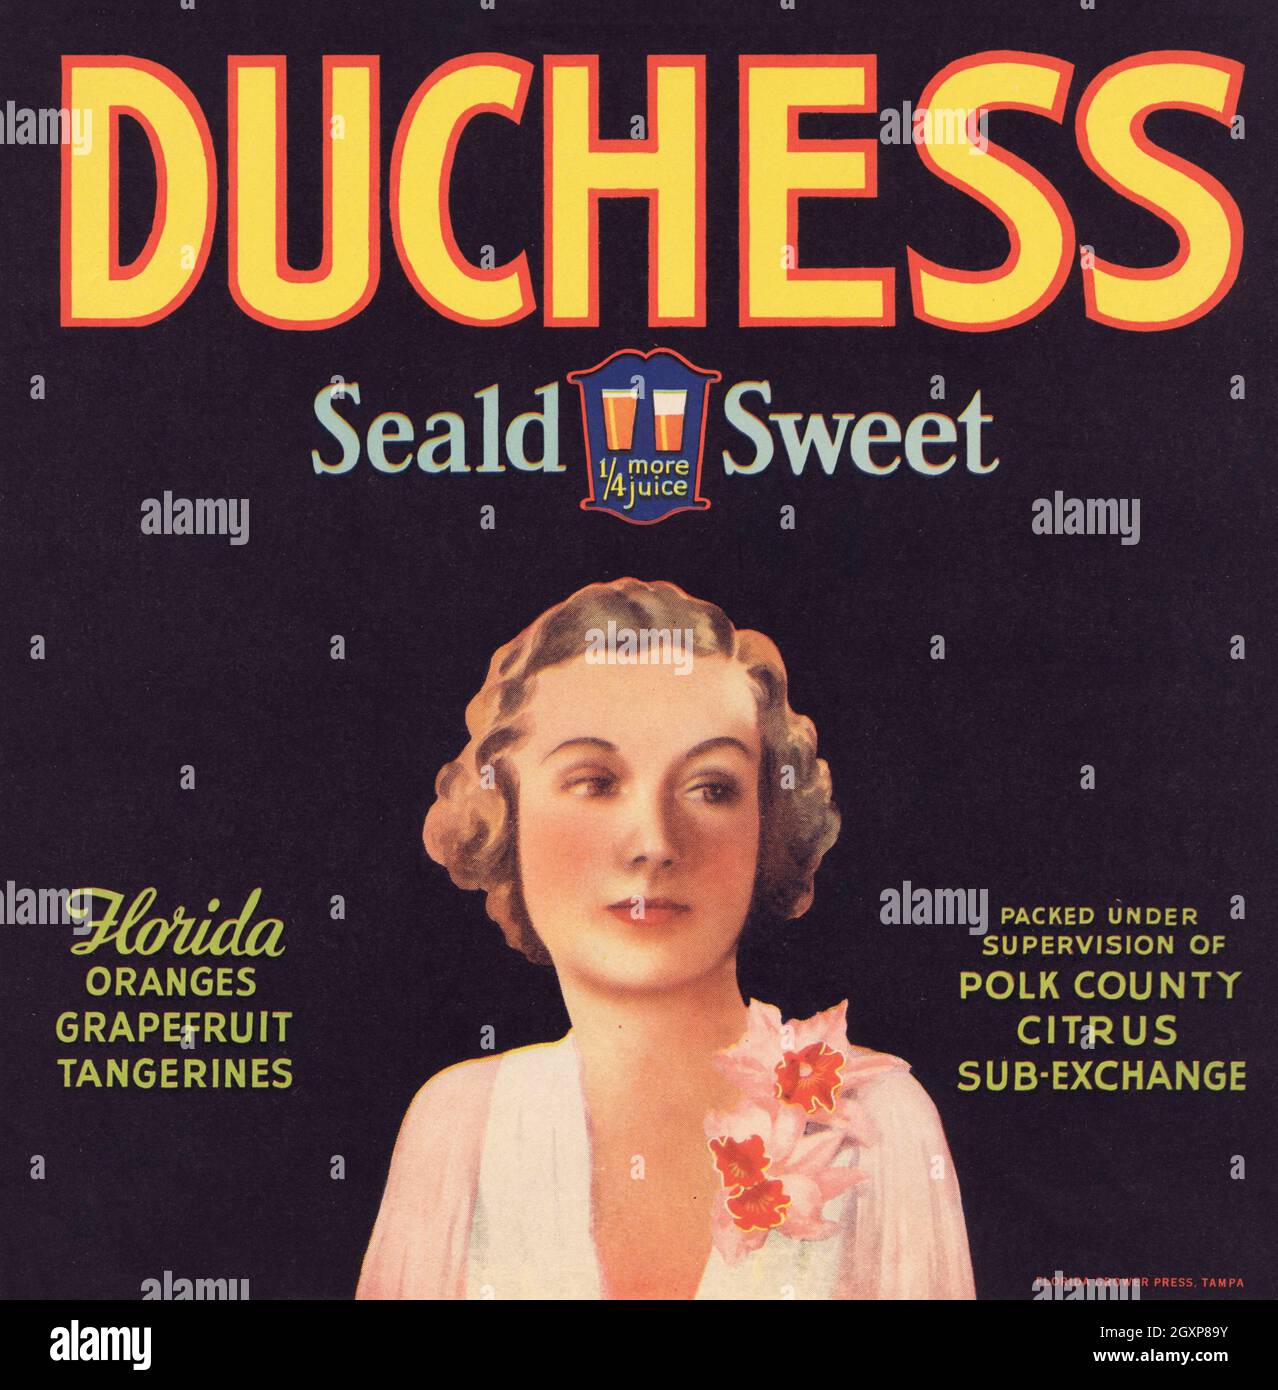 Duchessa Seald Dolce Foto Stock